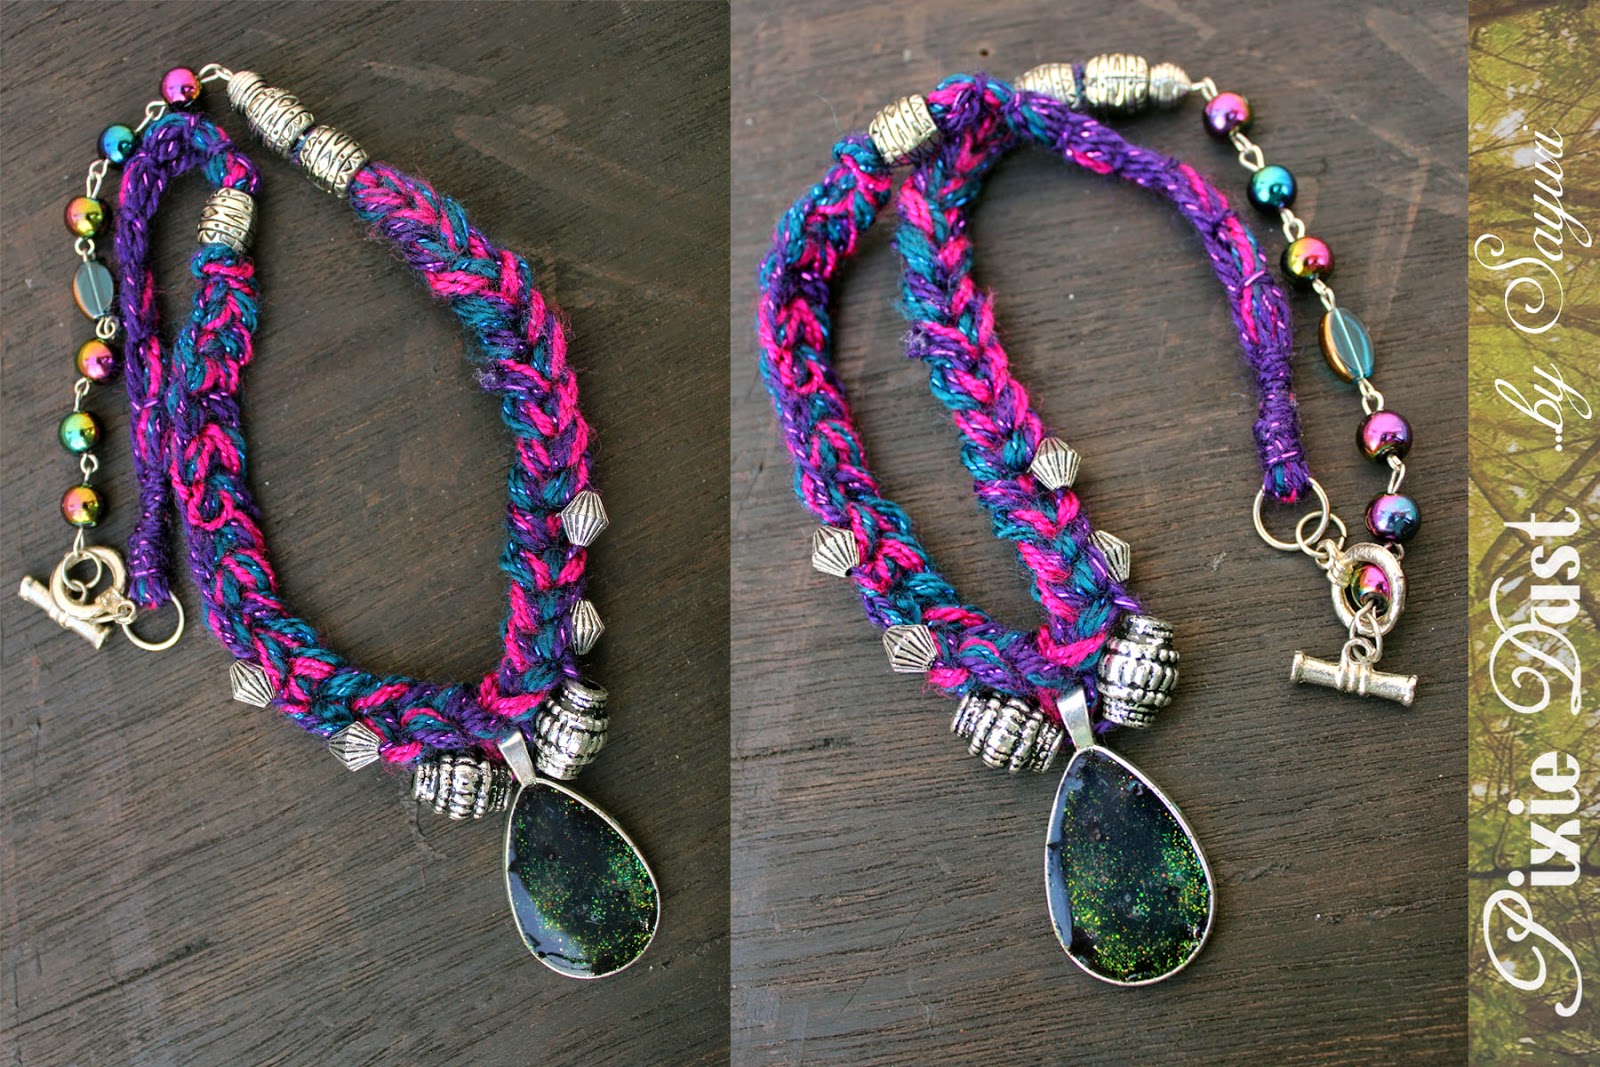 https://www.etsy.com/in-en/listing/187024381/crochet-asymmetrical-gypsy-necklace-with?ref=shop_home_feat_4